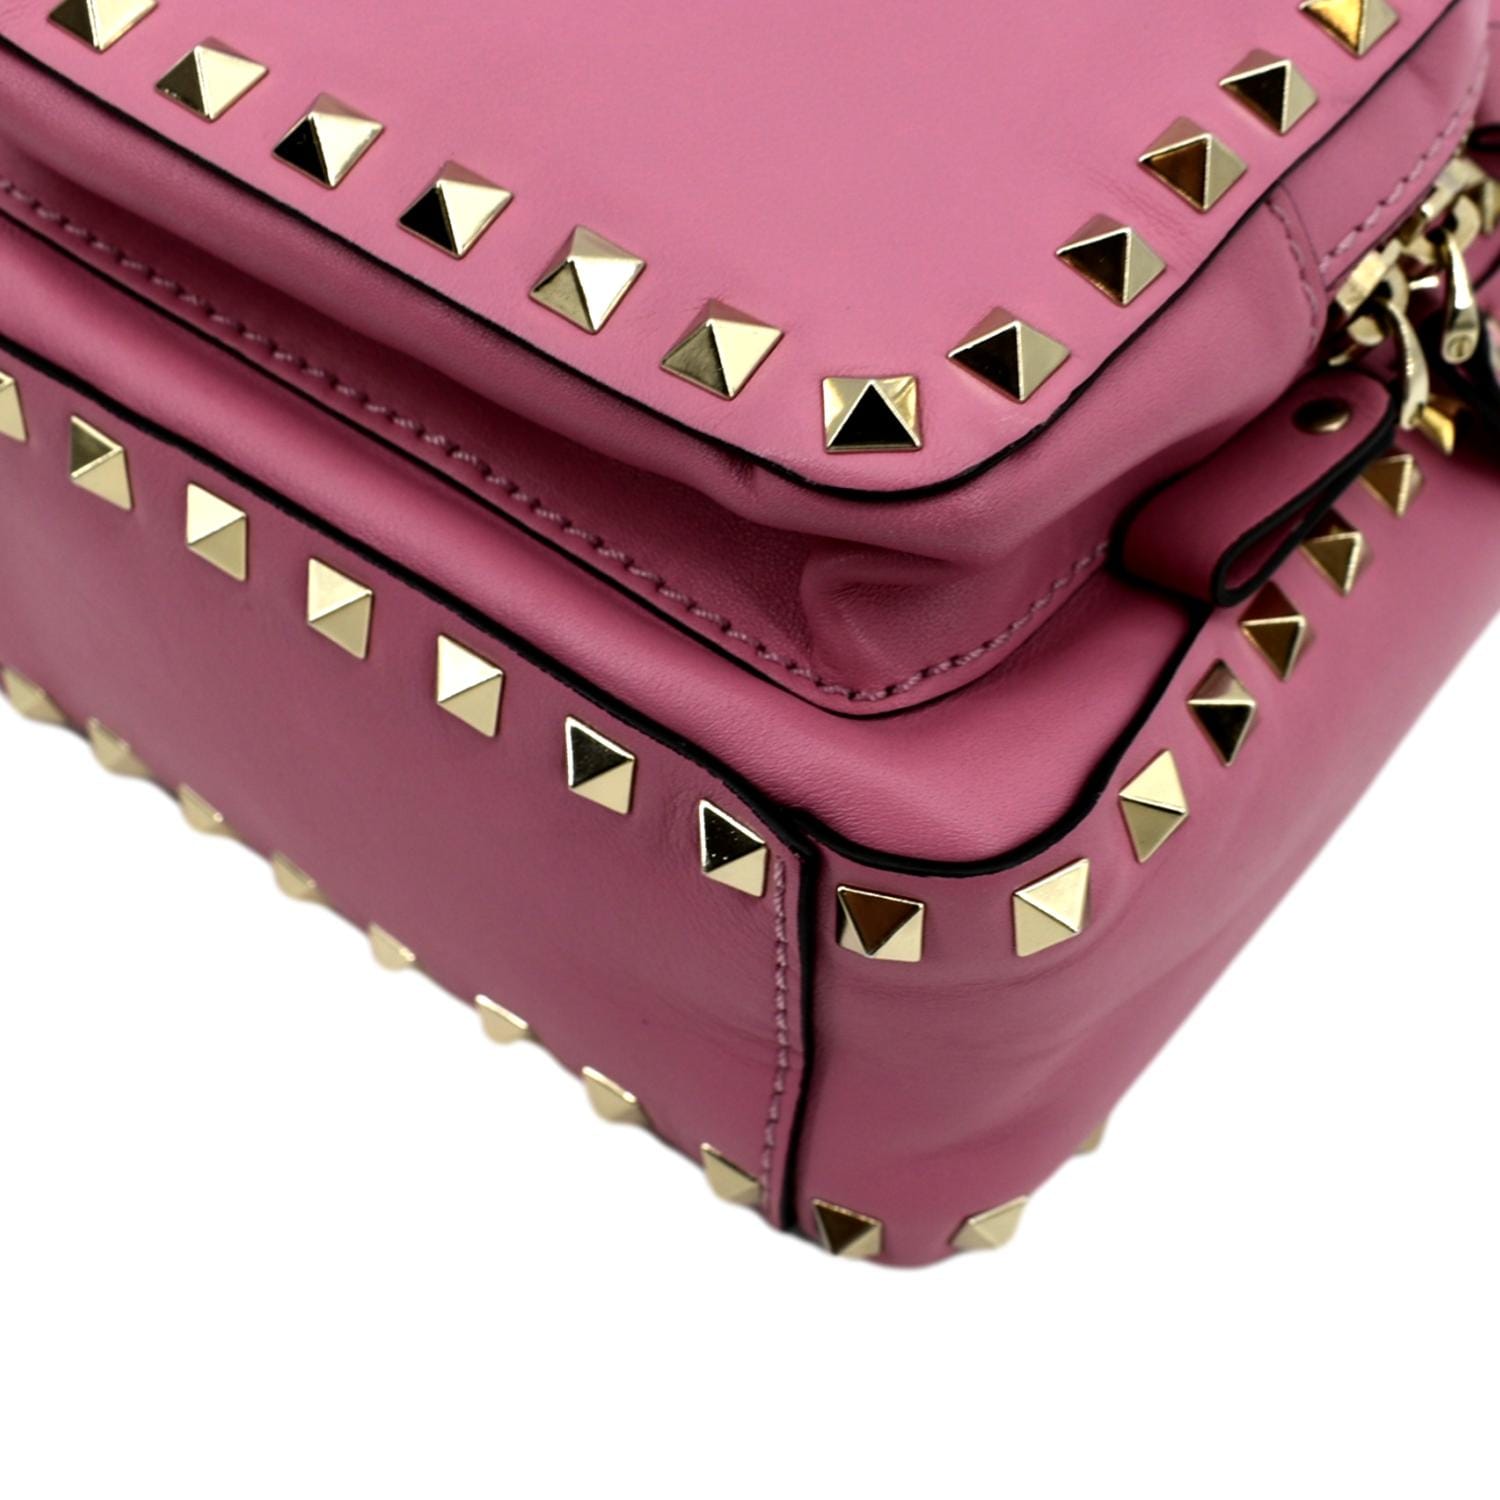 VALENTINO Garavani Rockstud Leather Backpack Pink